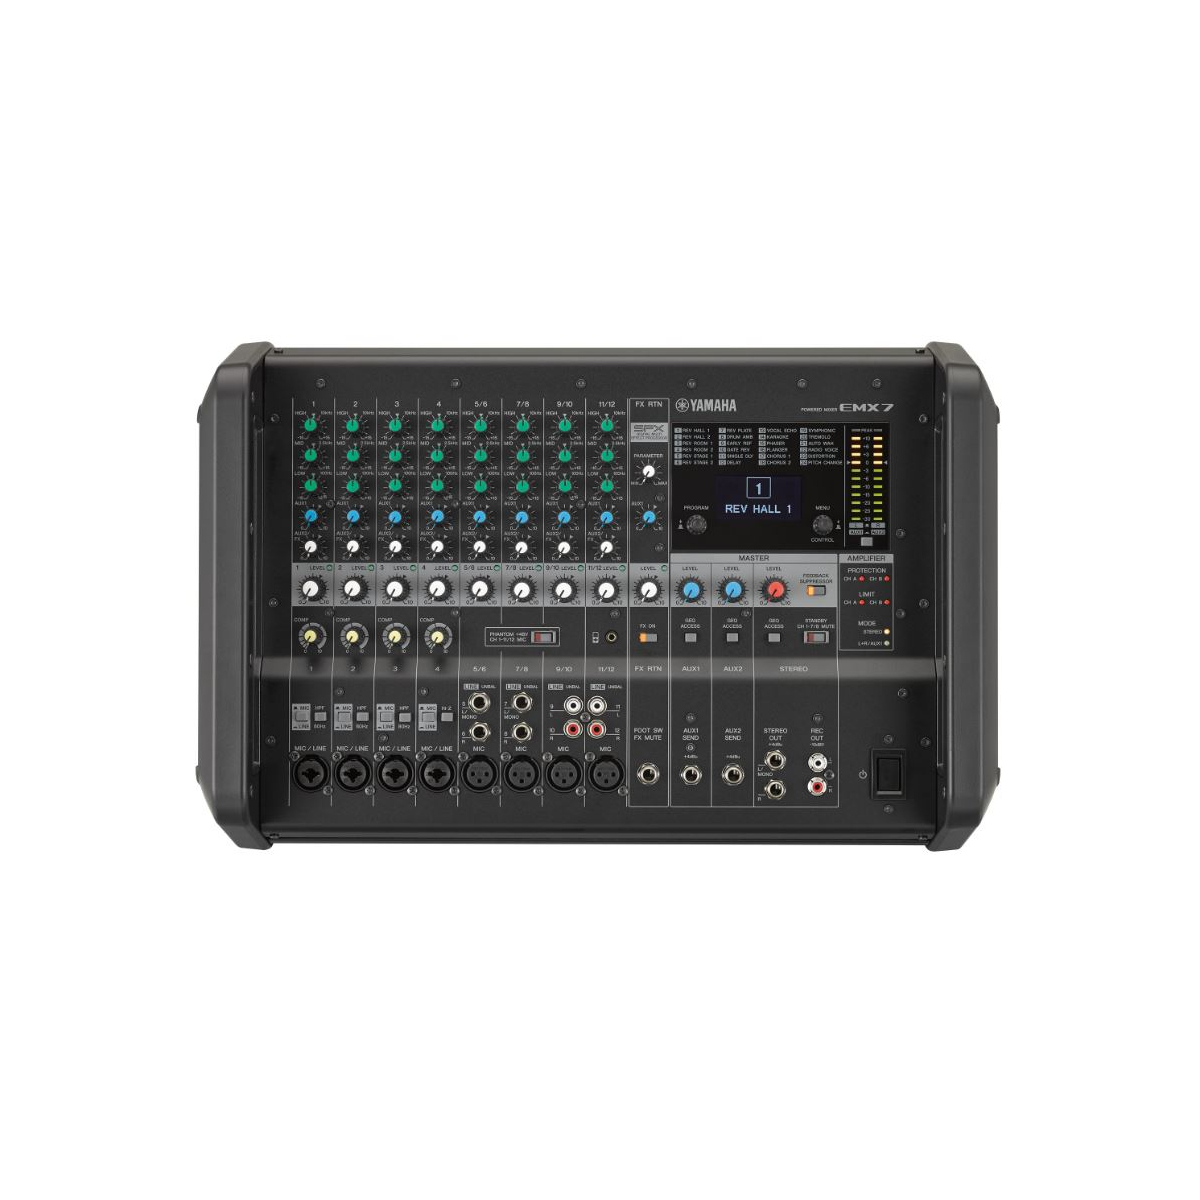 Consoles amplifiées - Yamaha - EMX 7